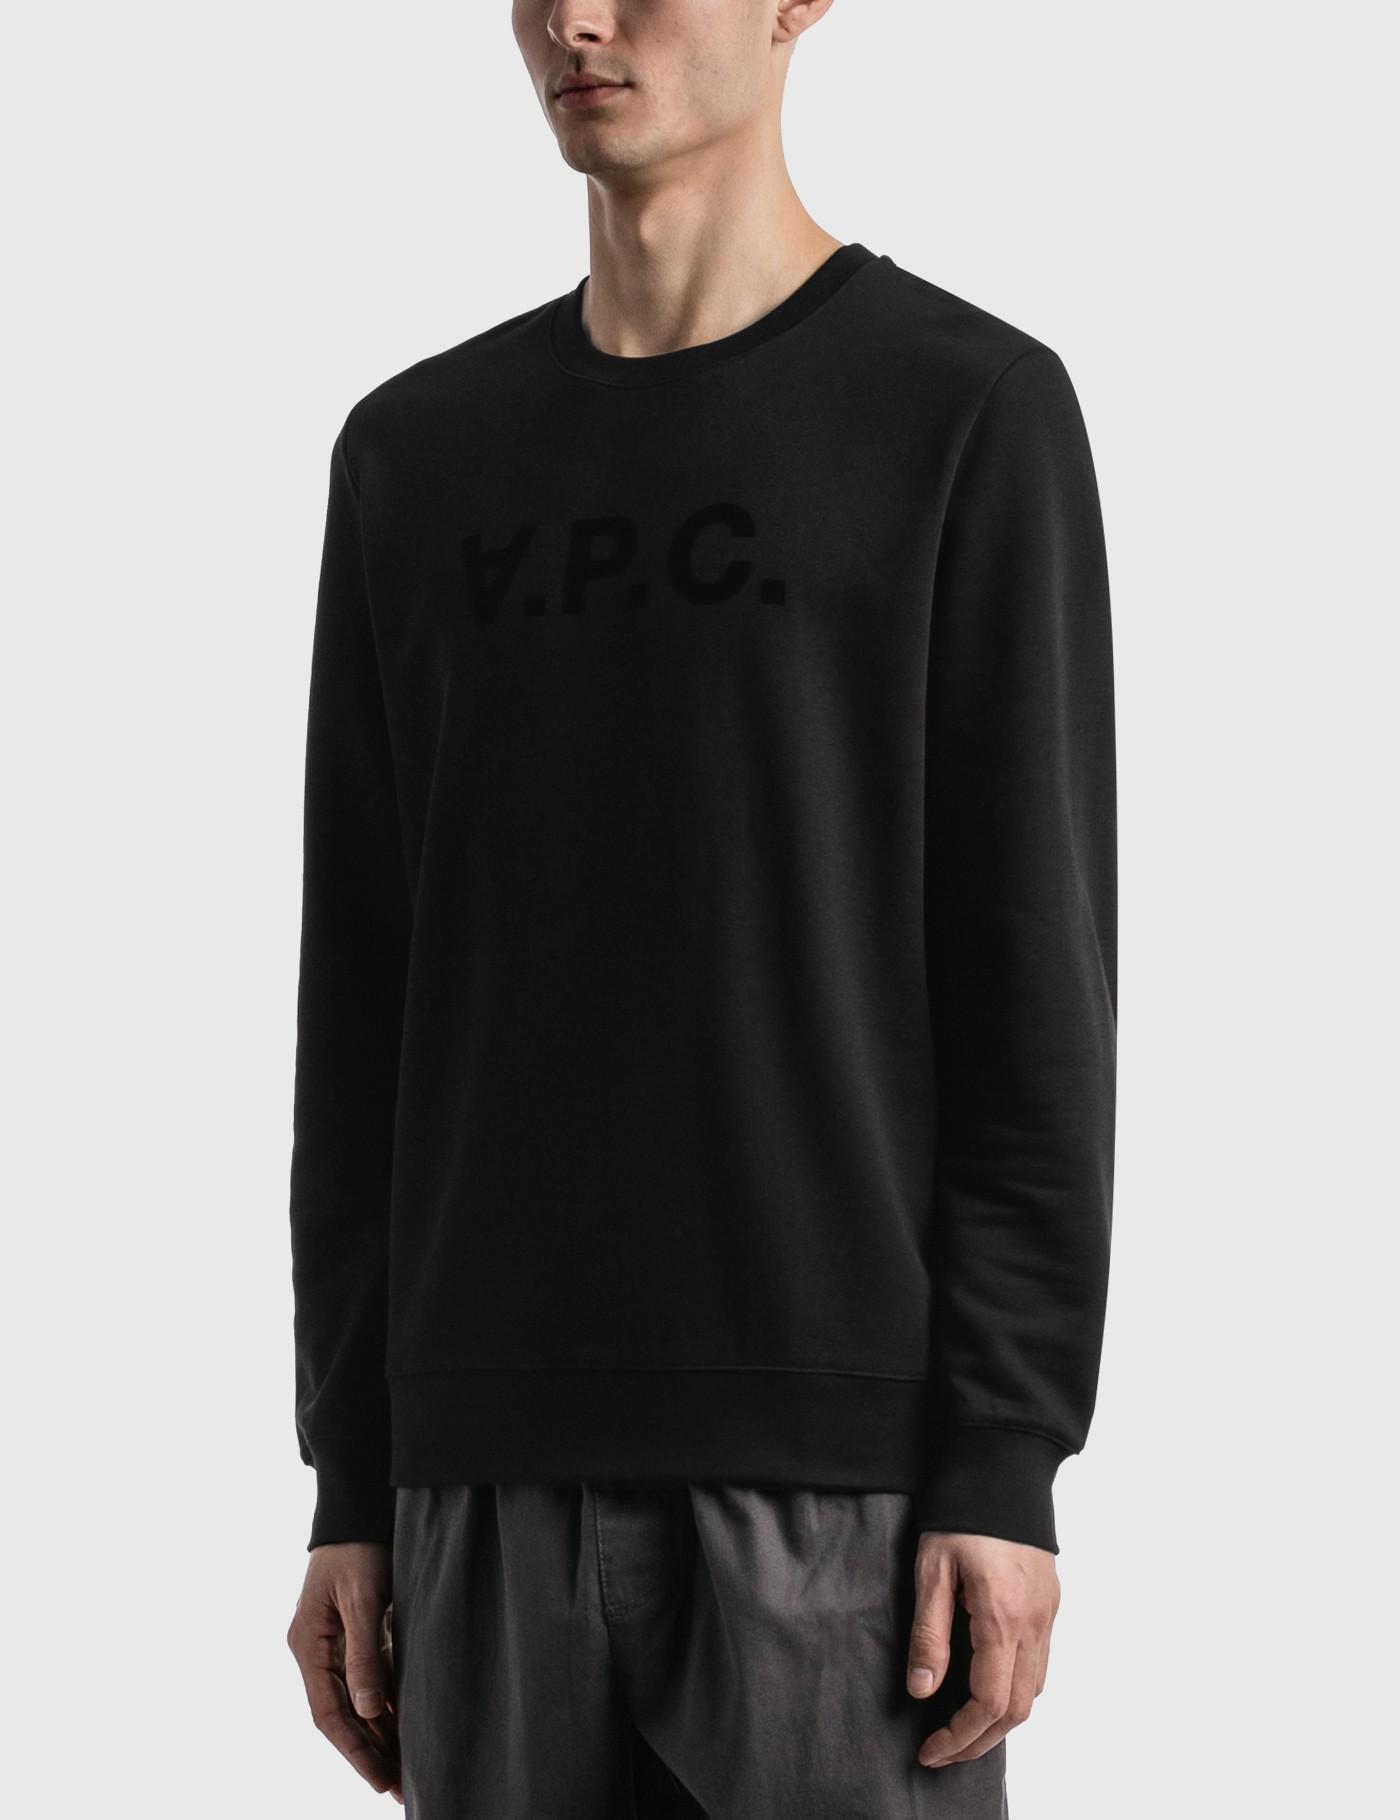 A.P.C. Vpc Sweatshirt in Black for Men - Lyst